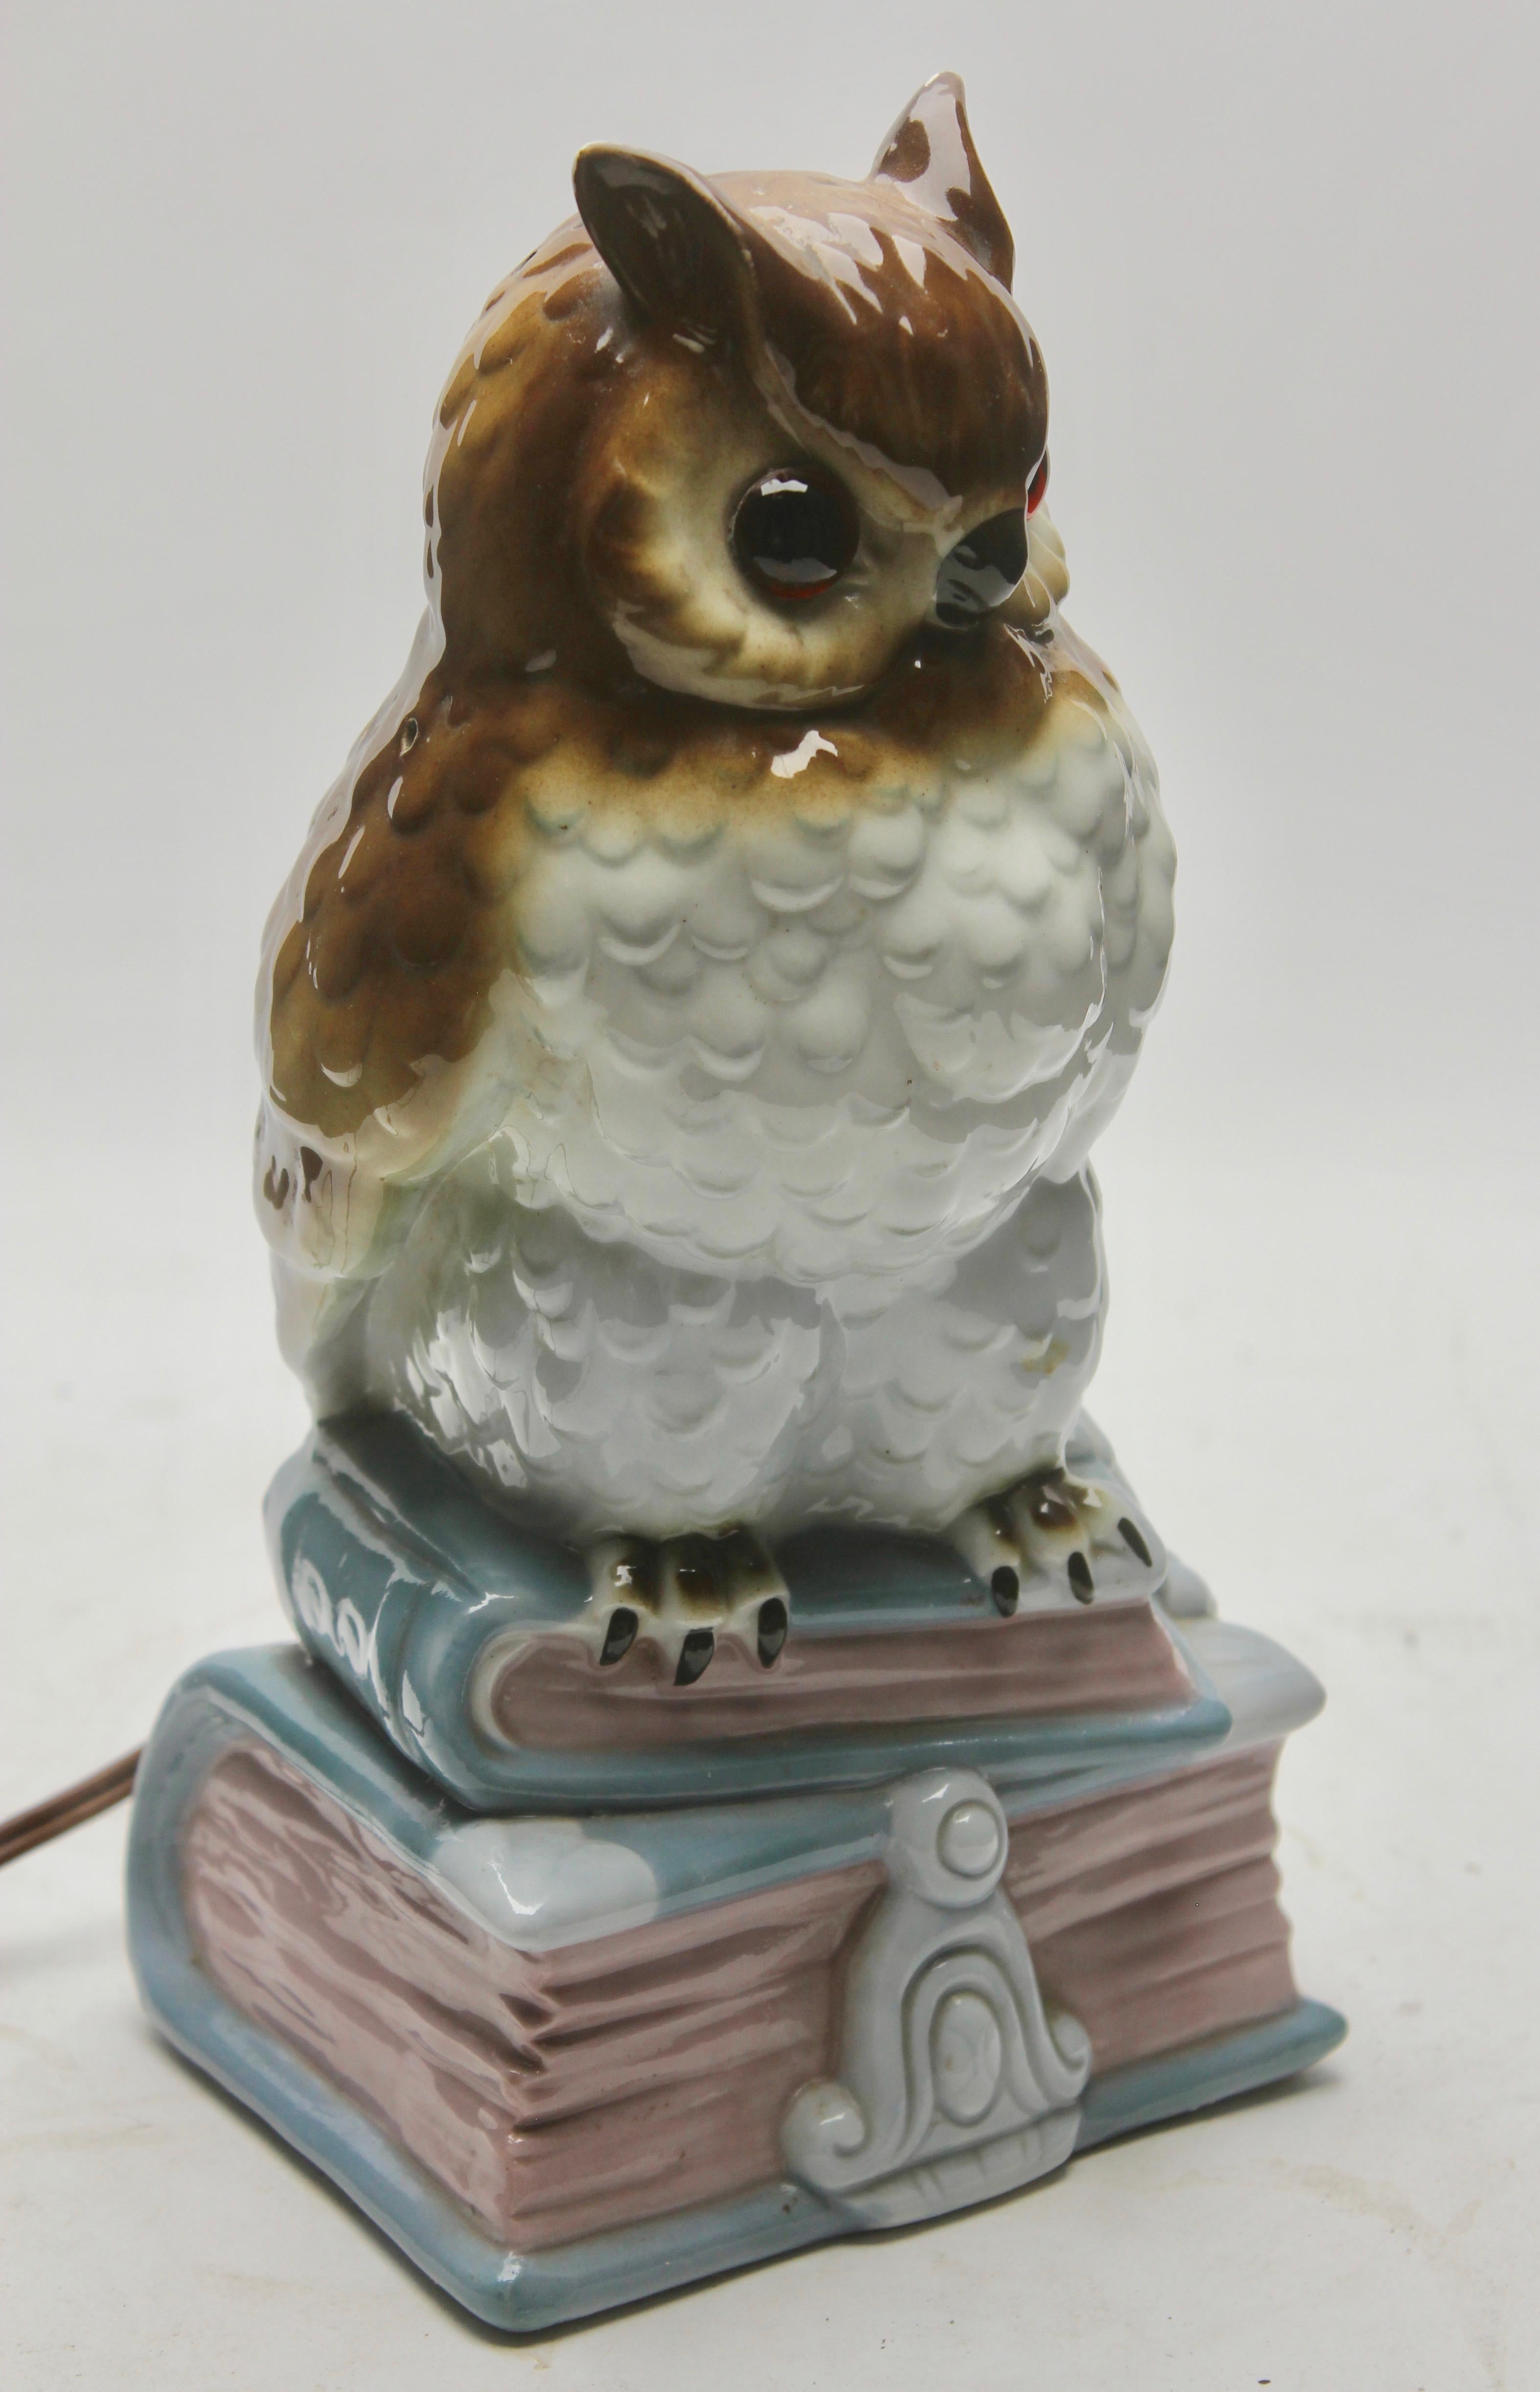 Ceramic Perfume Lamp of an Owl by Carl Scheidig/Gräfenthal, Germany, 1930s